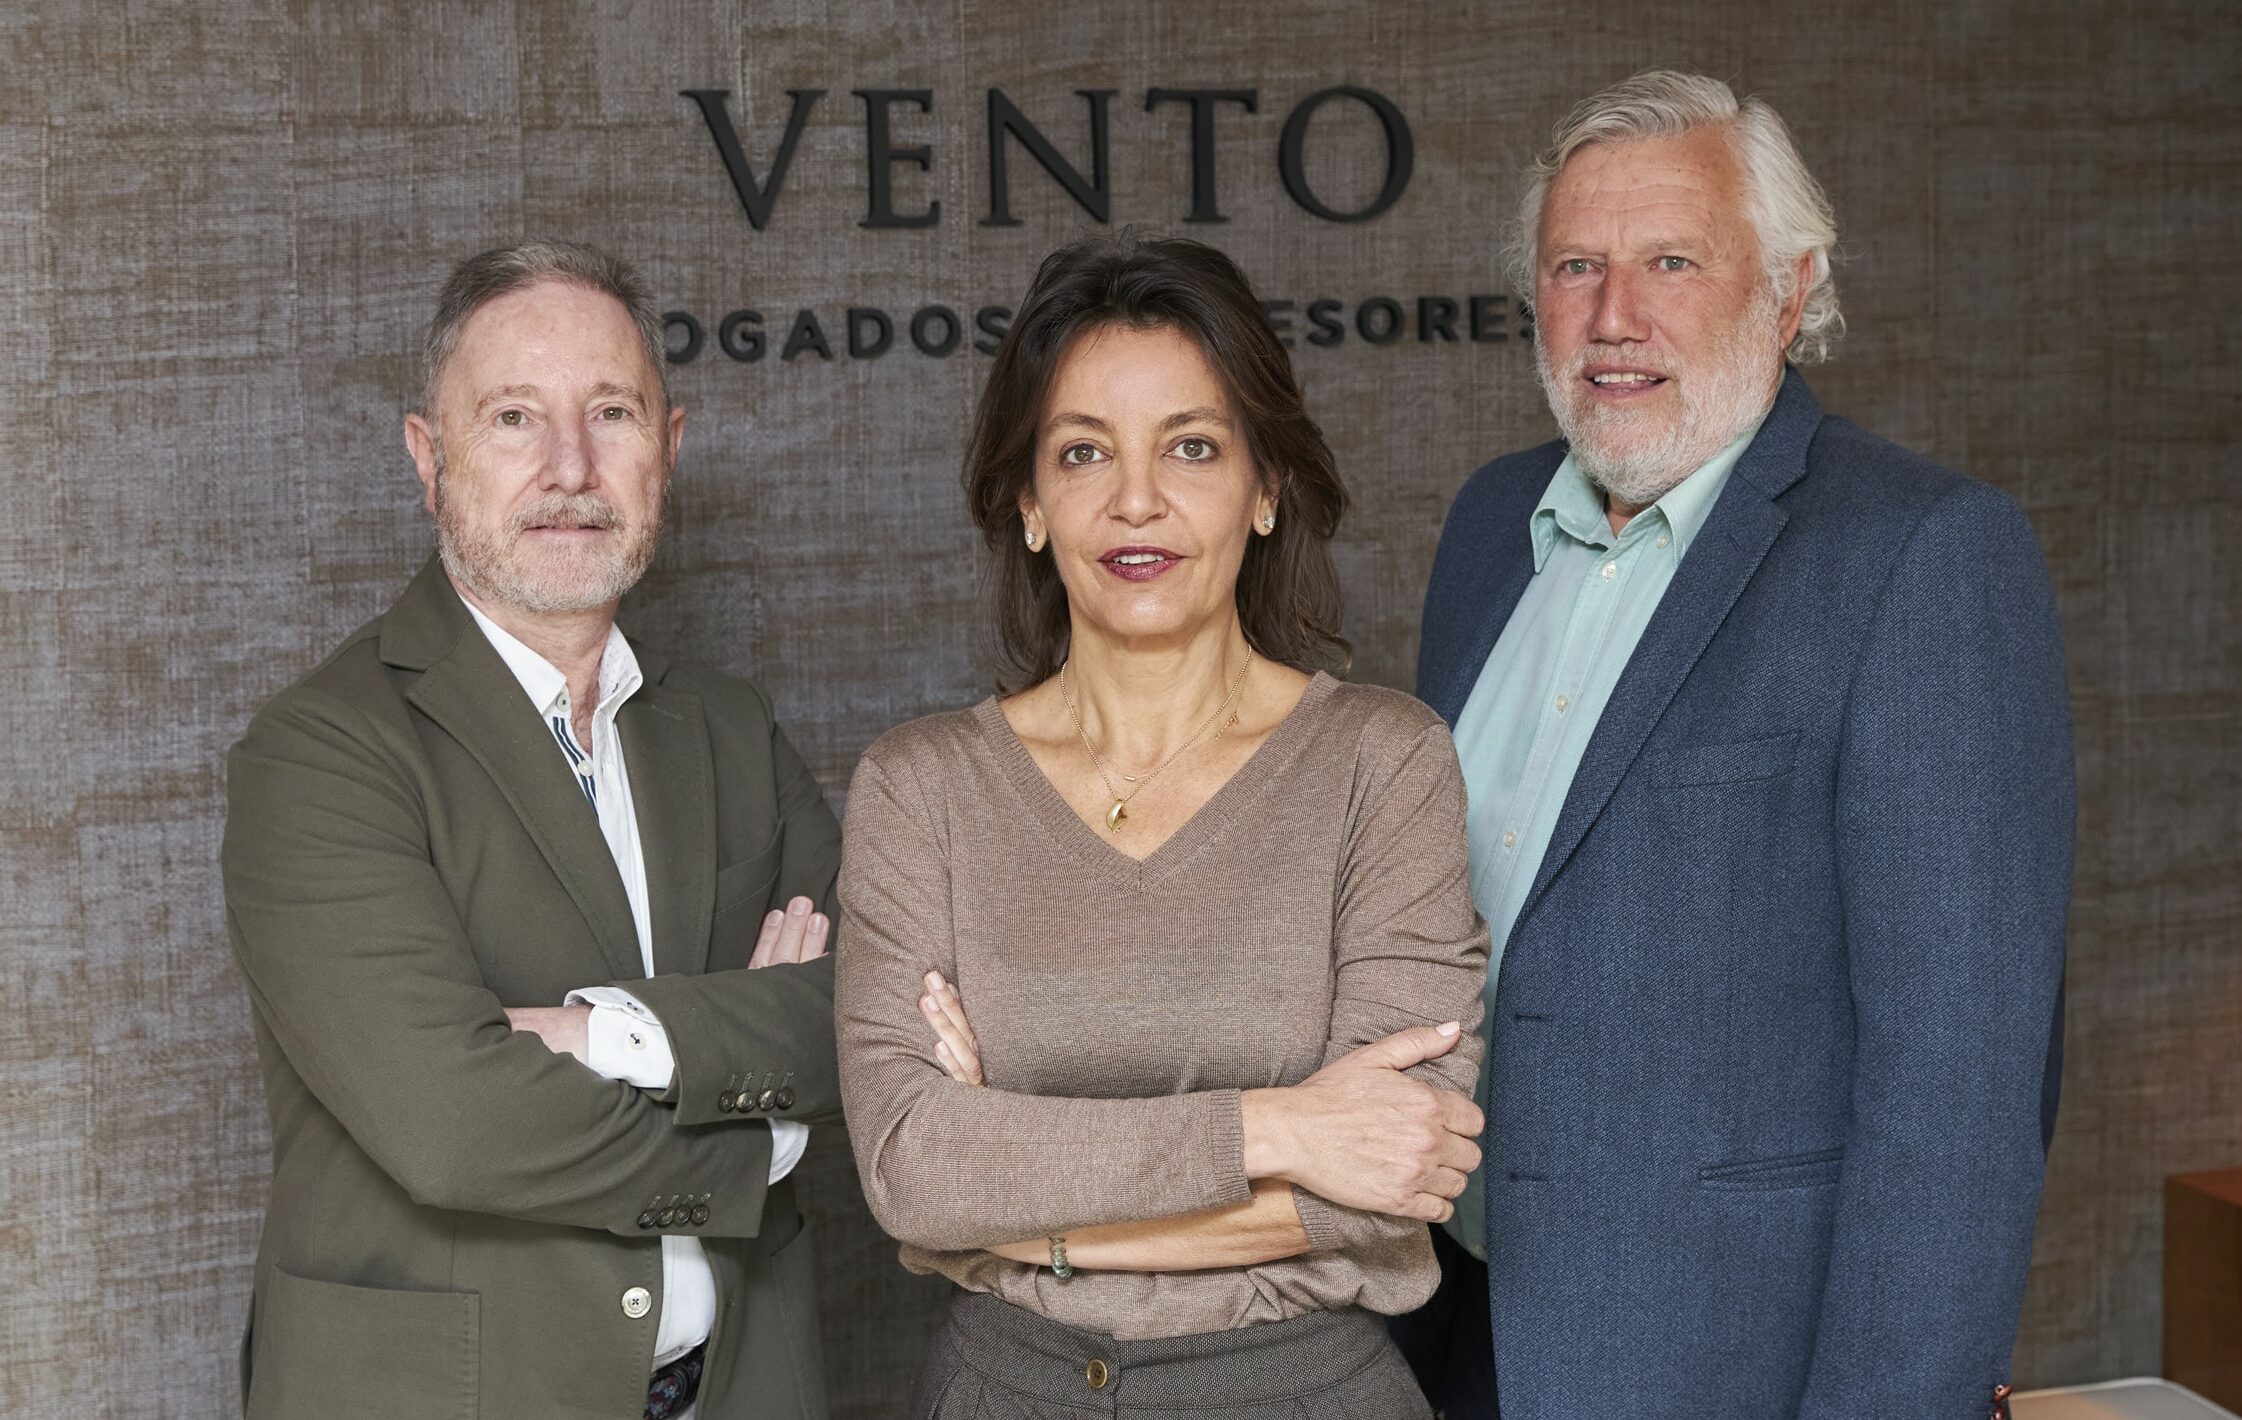 Vento Abogados & Asesores irrumpe en Madrid como primer paso para su expansión nacional como despacho